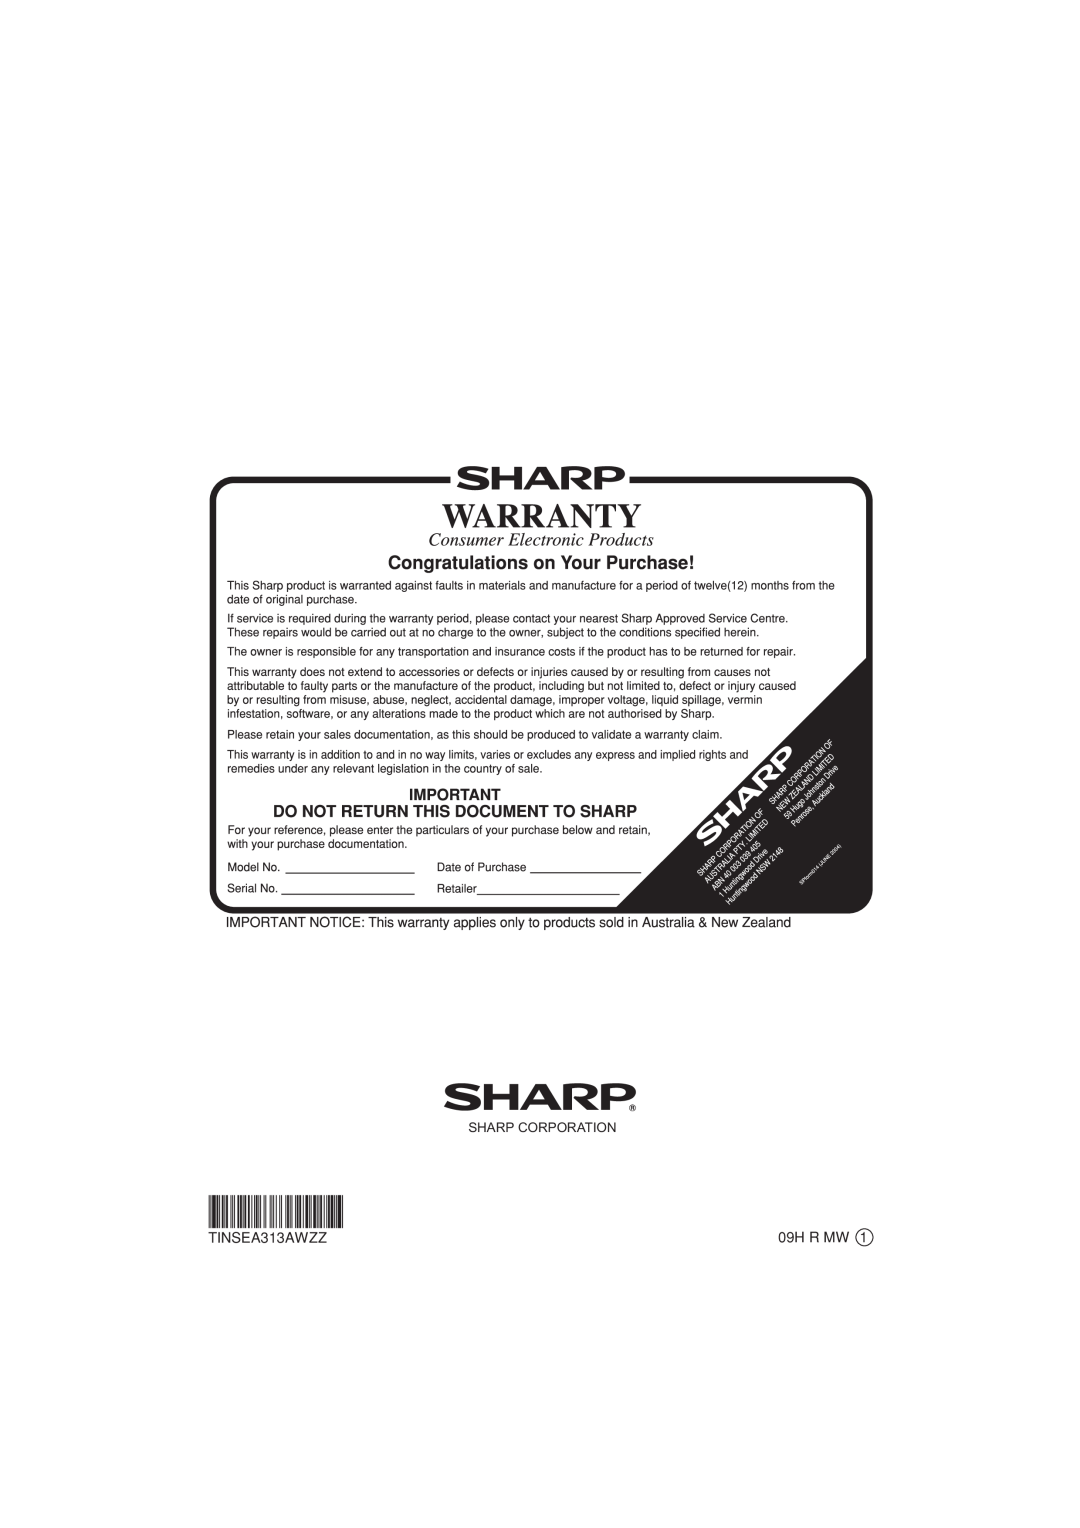 Sharp CD-DH790NH operation manual TINSEA313AWZZ, 09H R MW, Sharp Corporation 